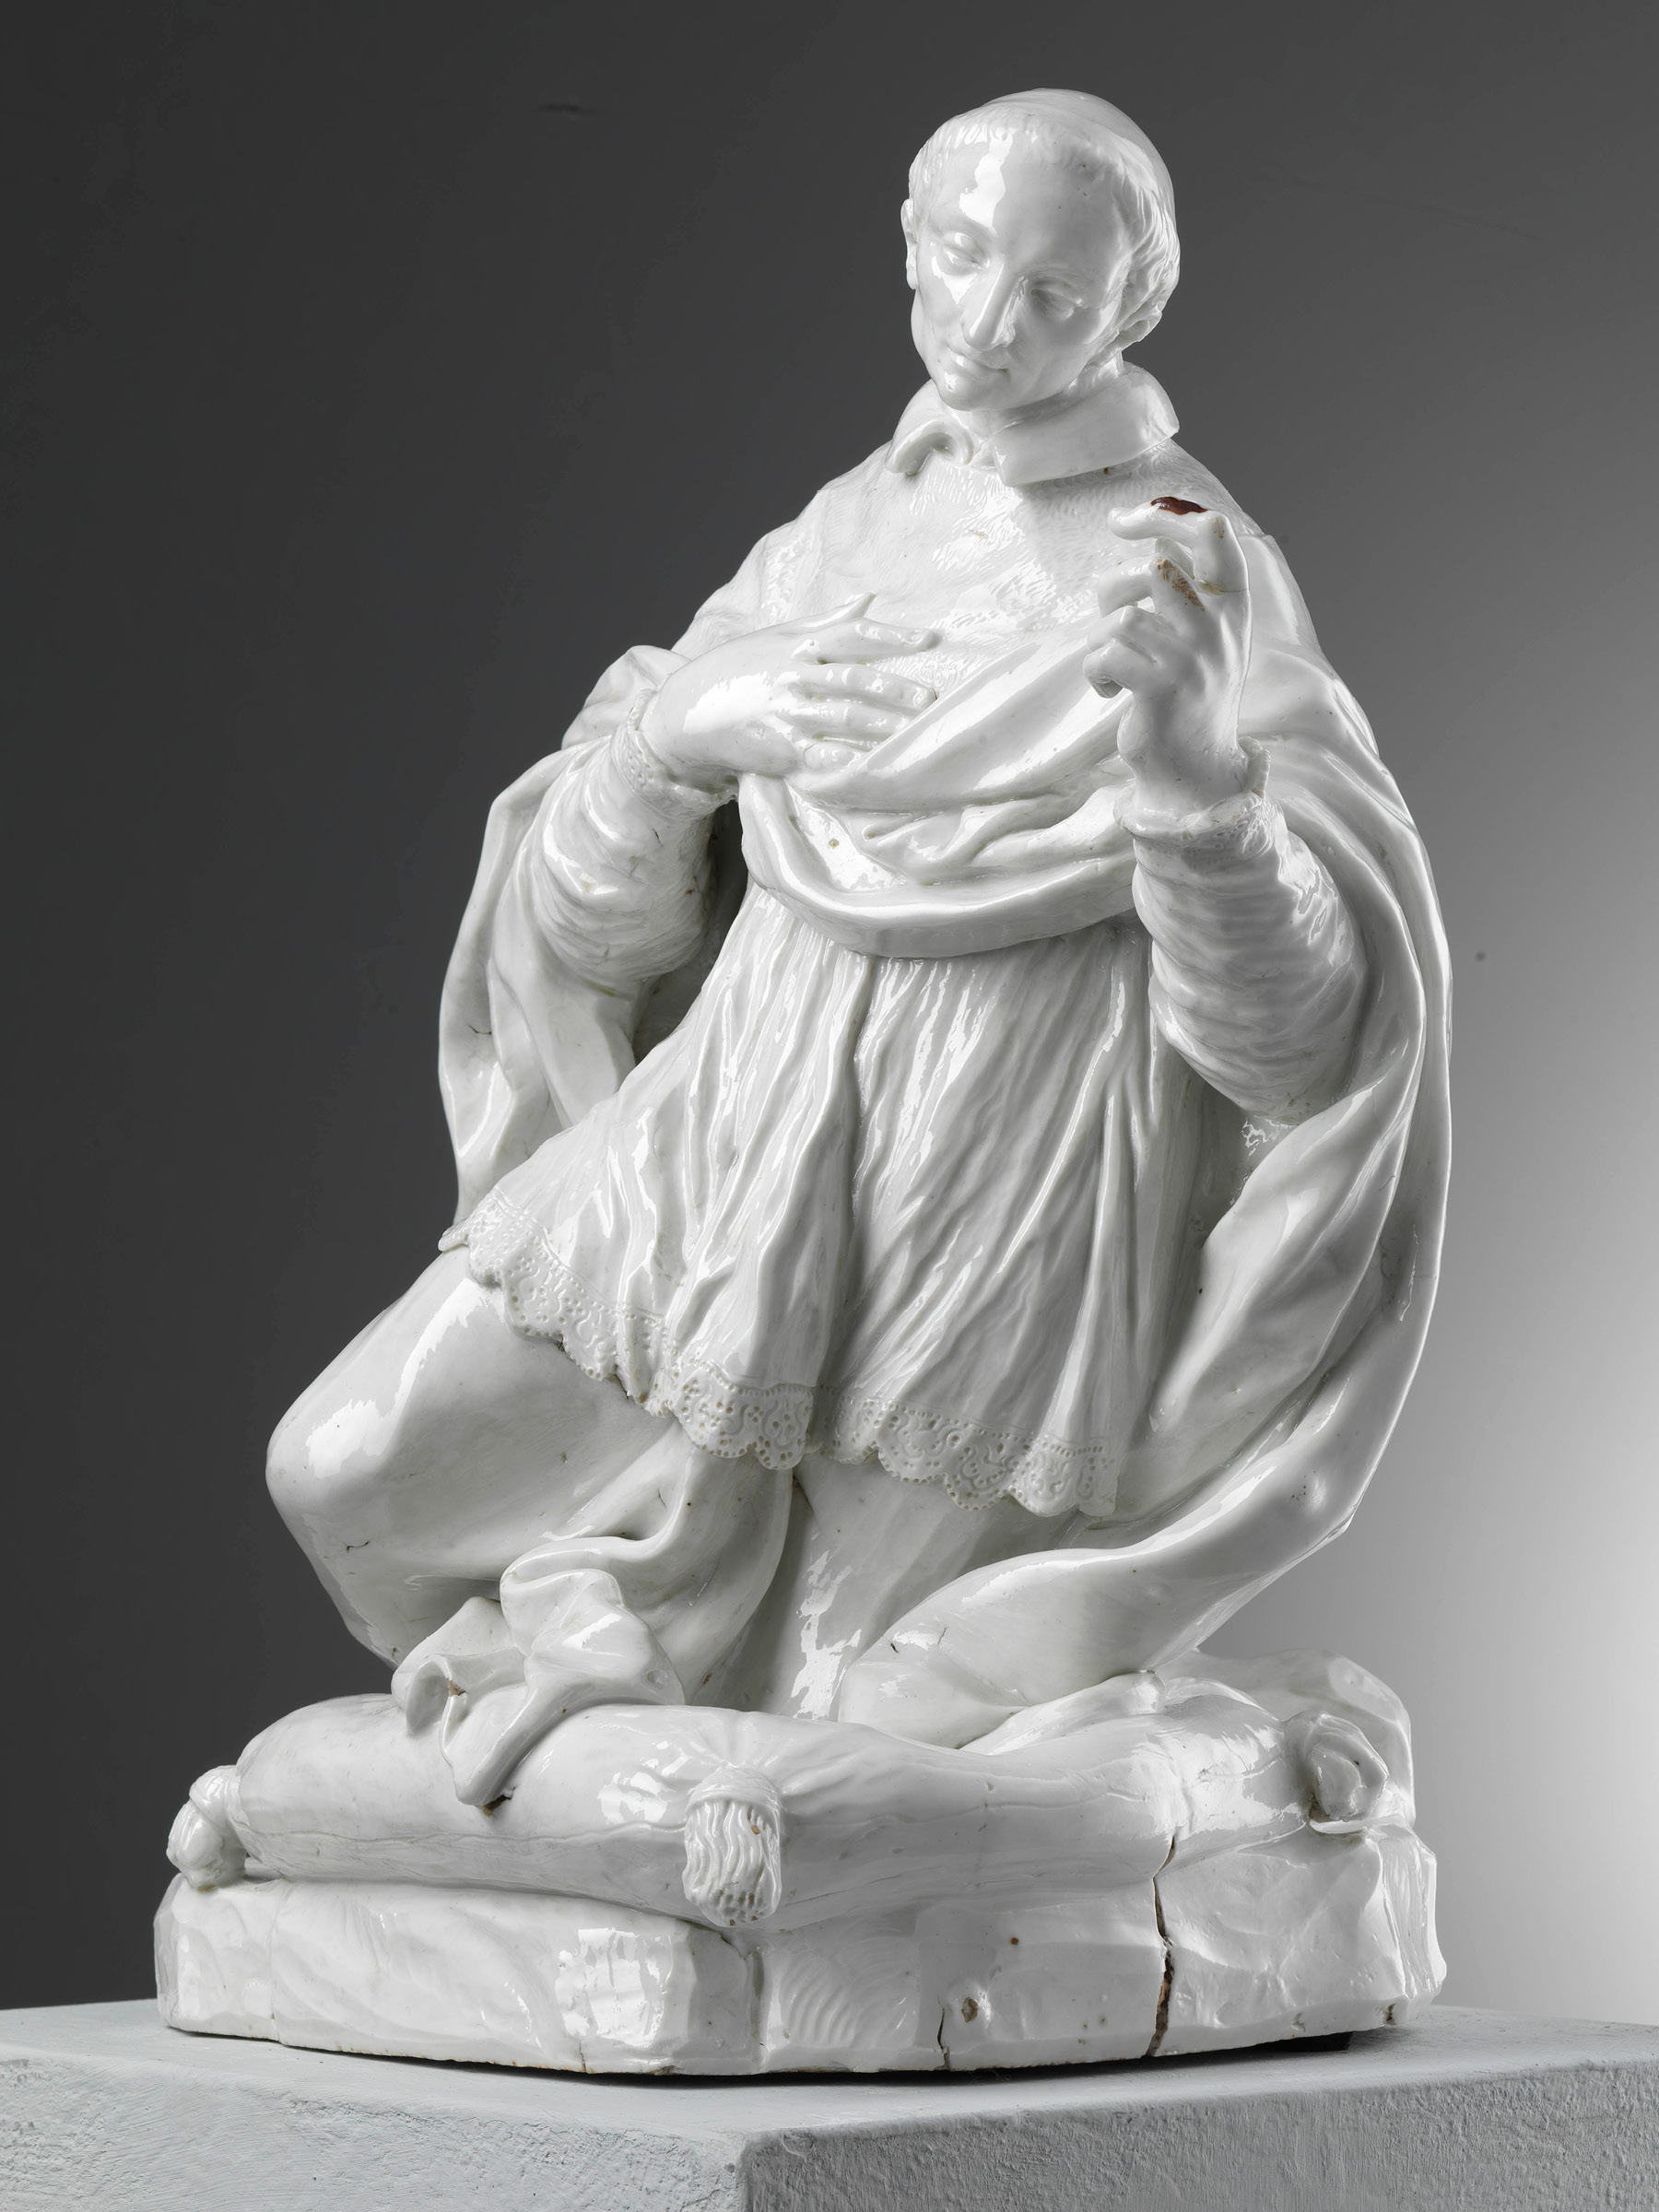 Giovan Battista Foggini - from a model by St Charles Borromeo in Adoration of the Crucifix